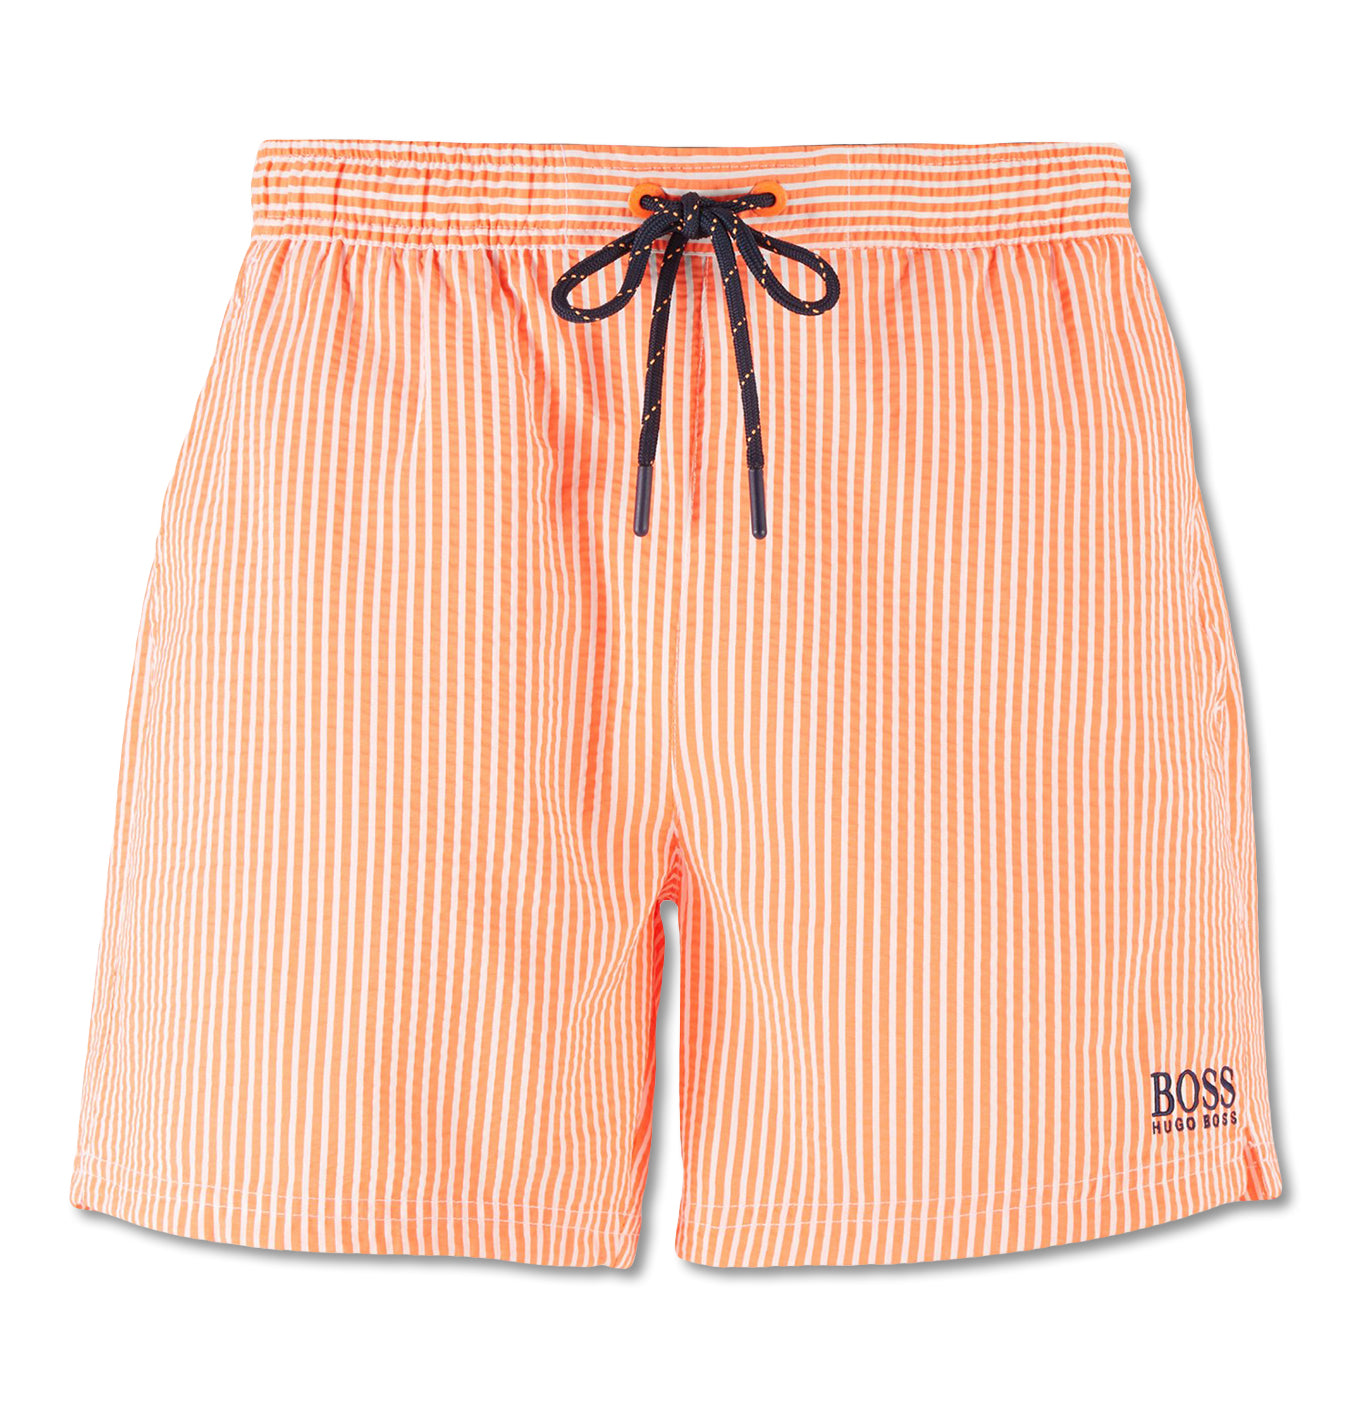 Orange Velvet Fish Swim Shorts - Male 